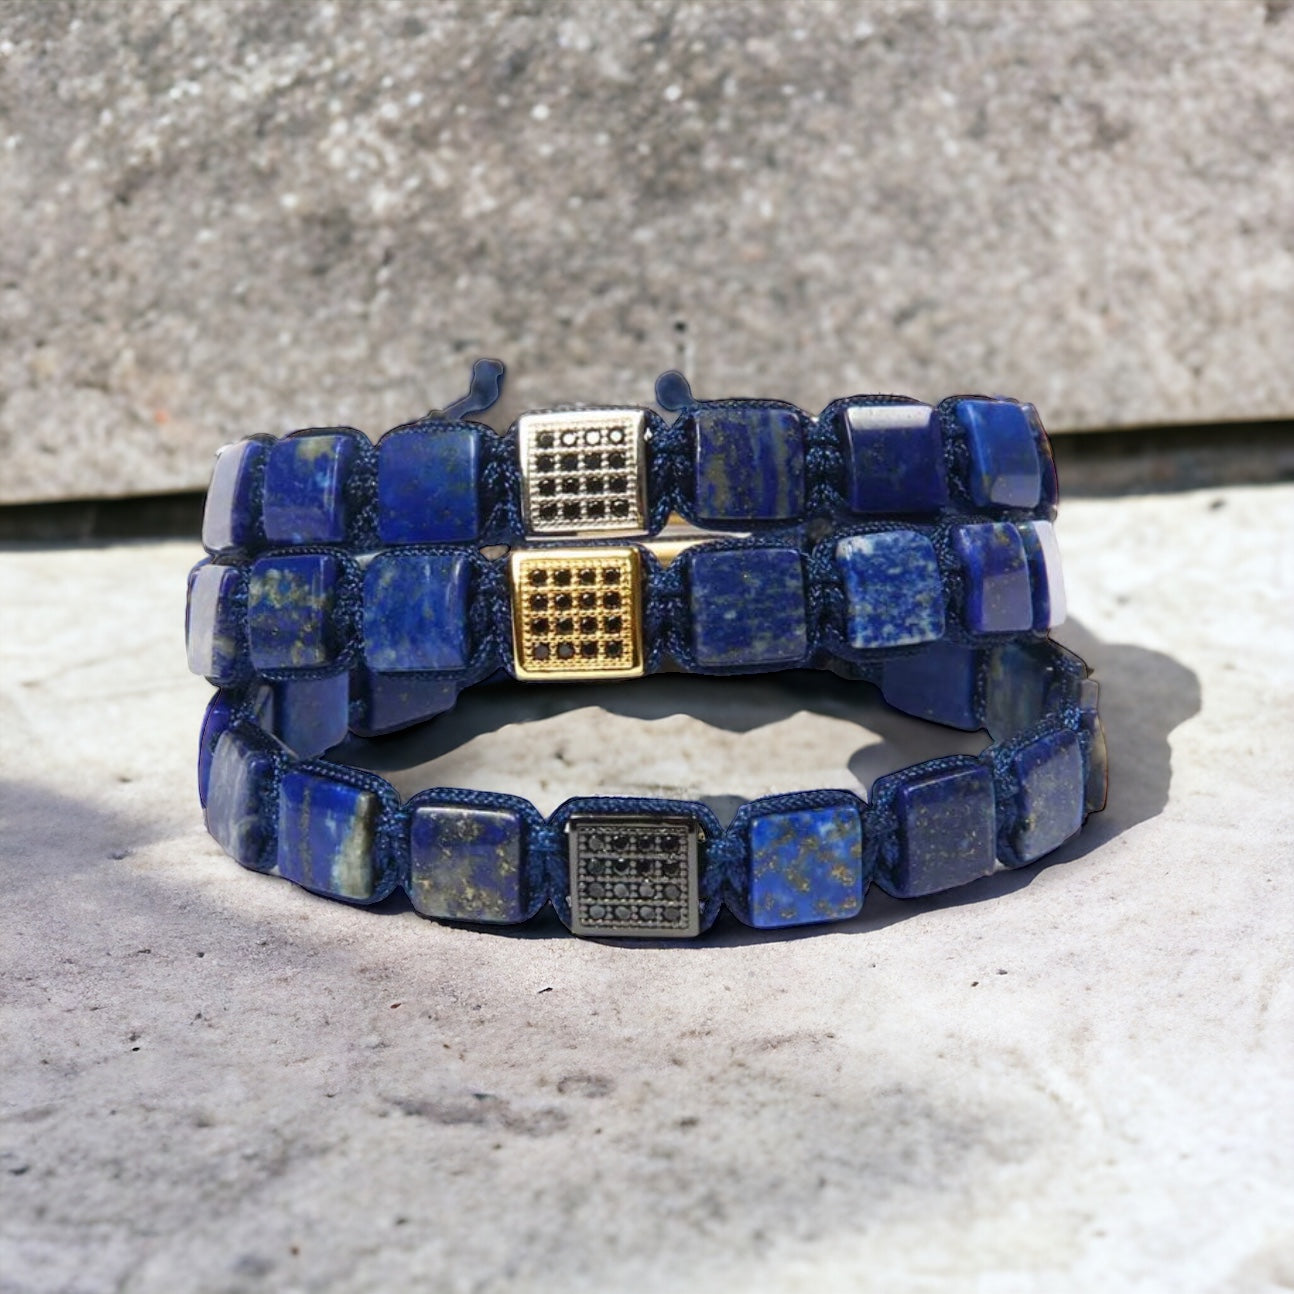 Bundle of 3 Square Bead Lapis Lazuli Bracelets - My Harmony Tree